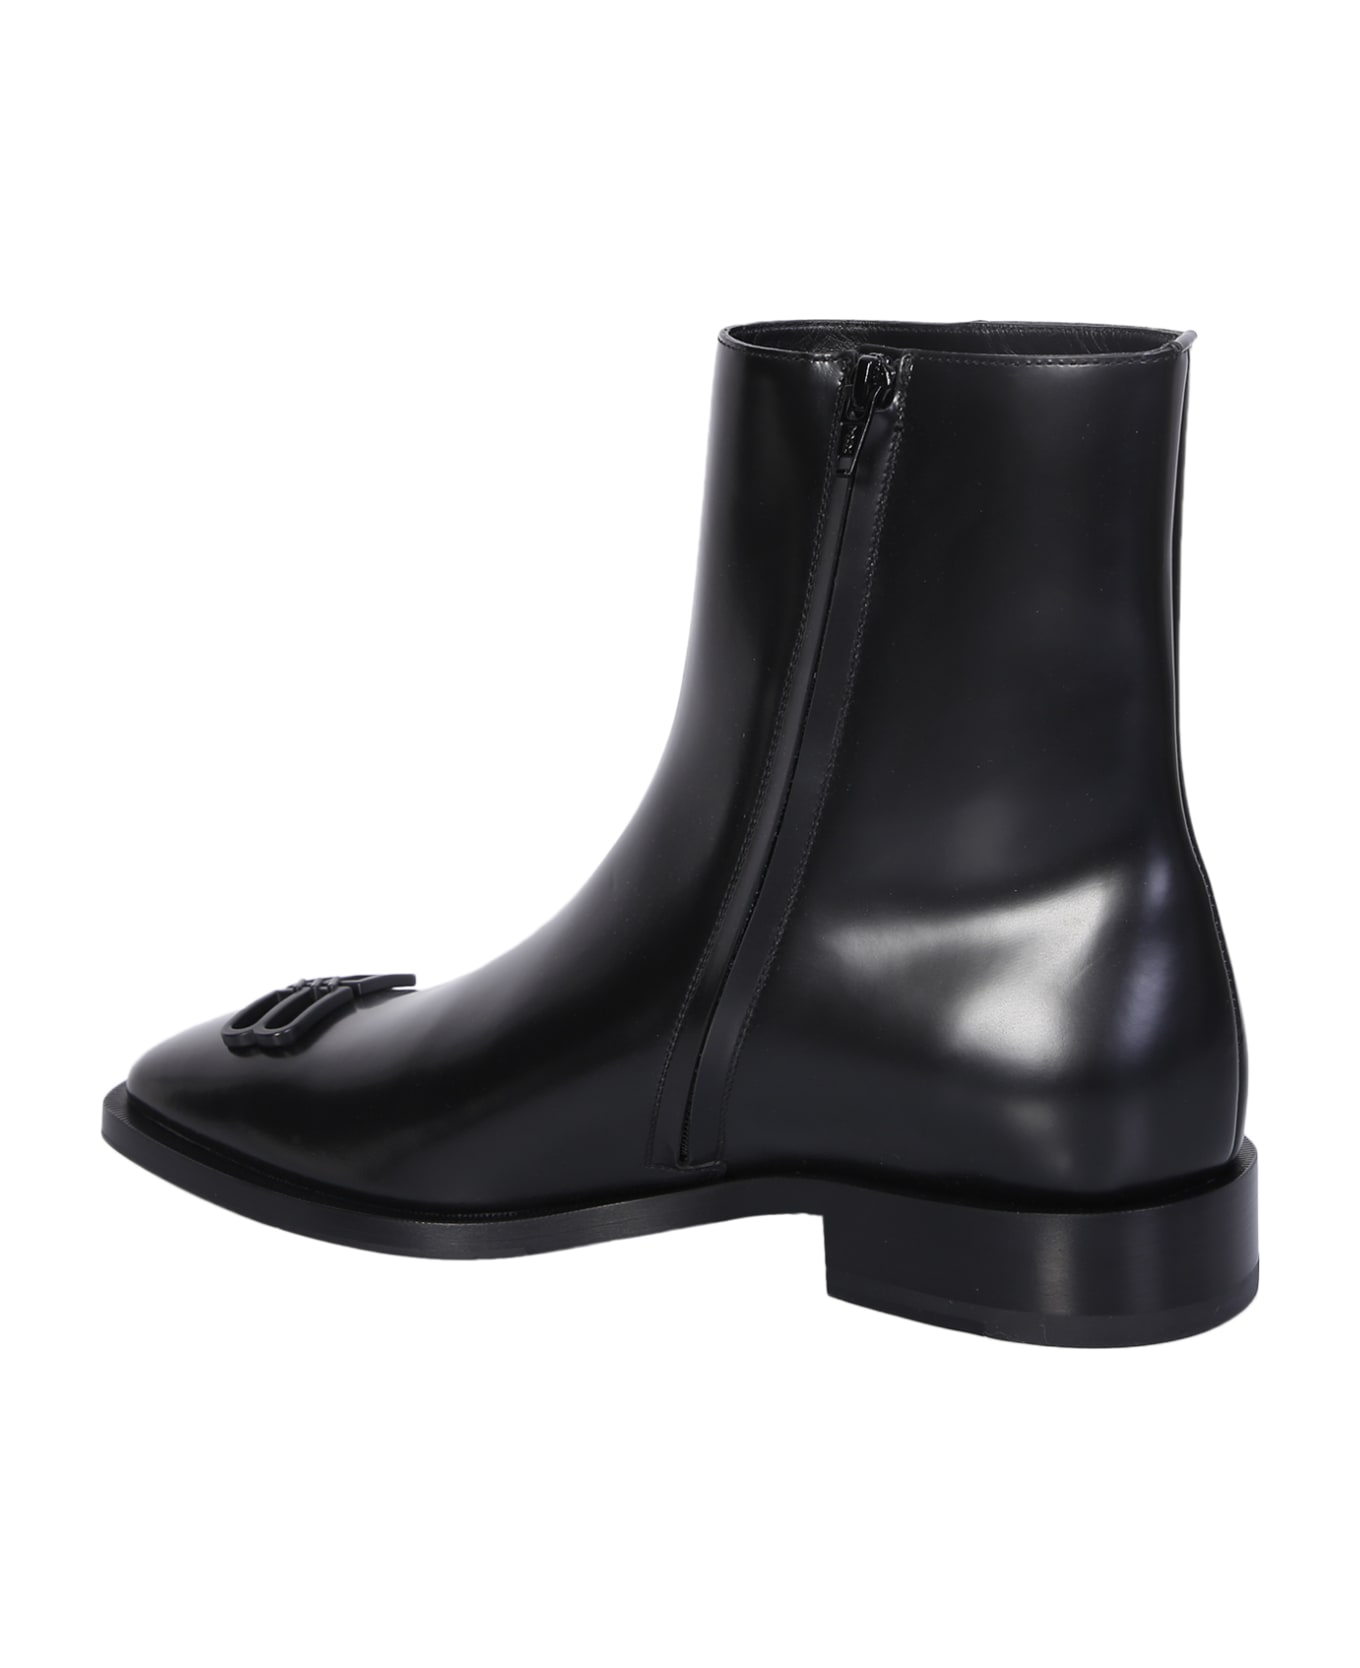 Balenciaga Rim Leather Ankle Boots - Black